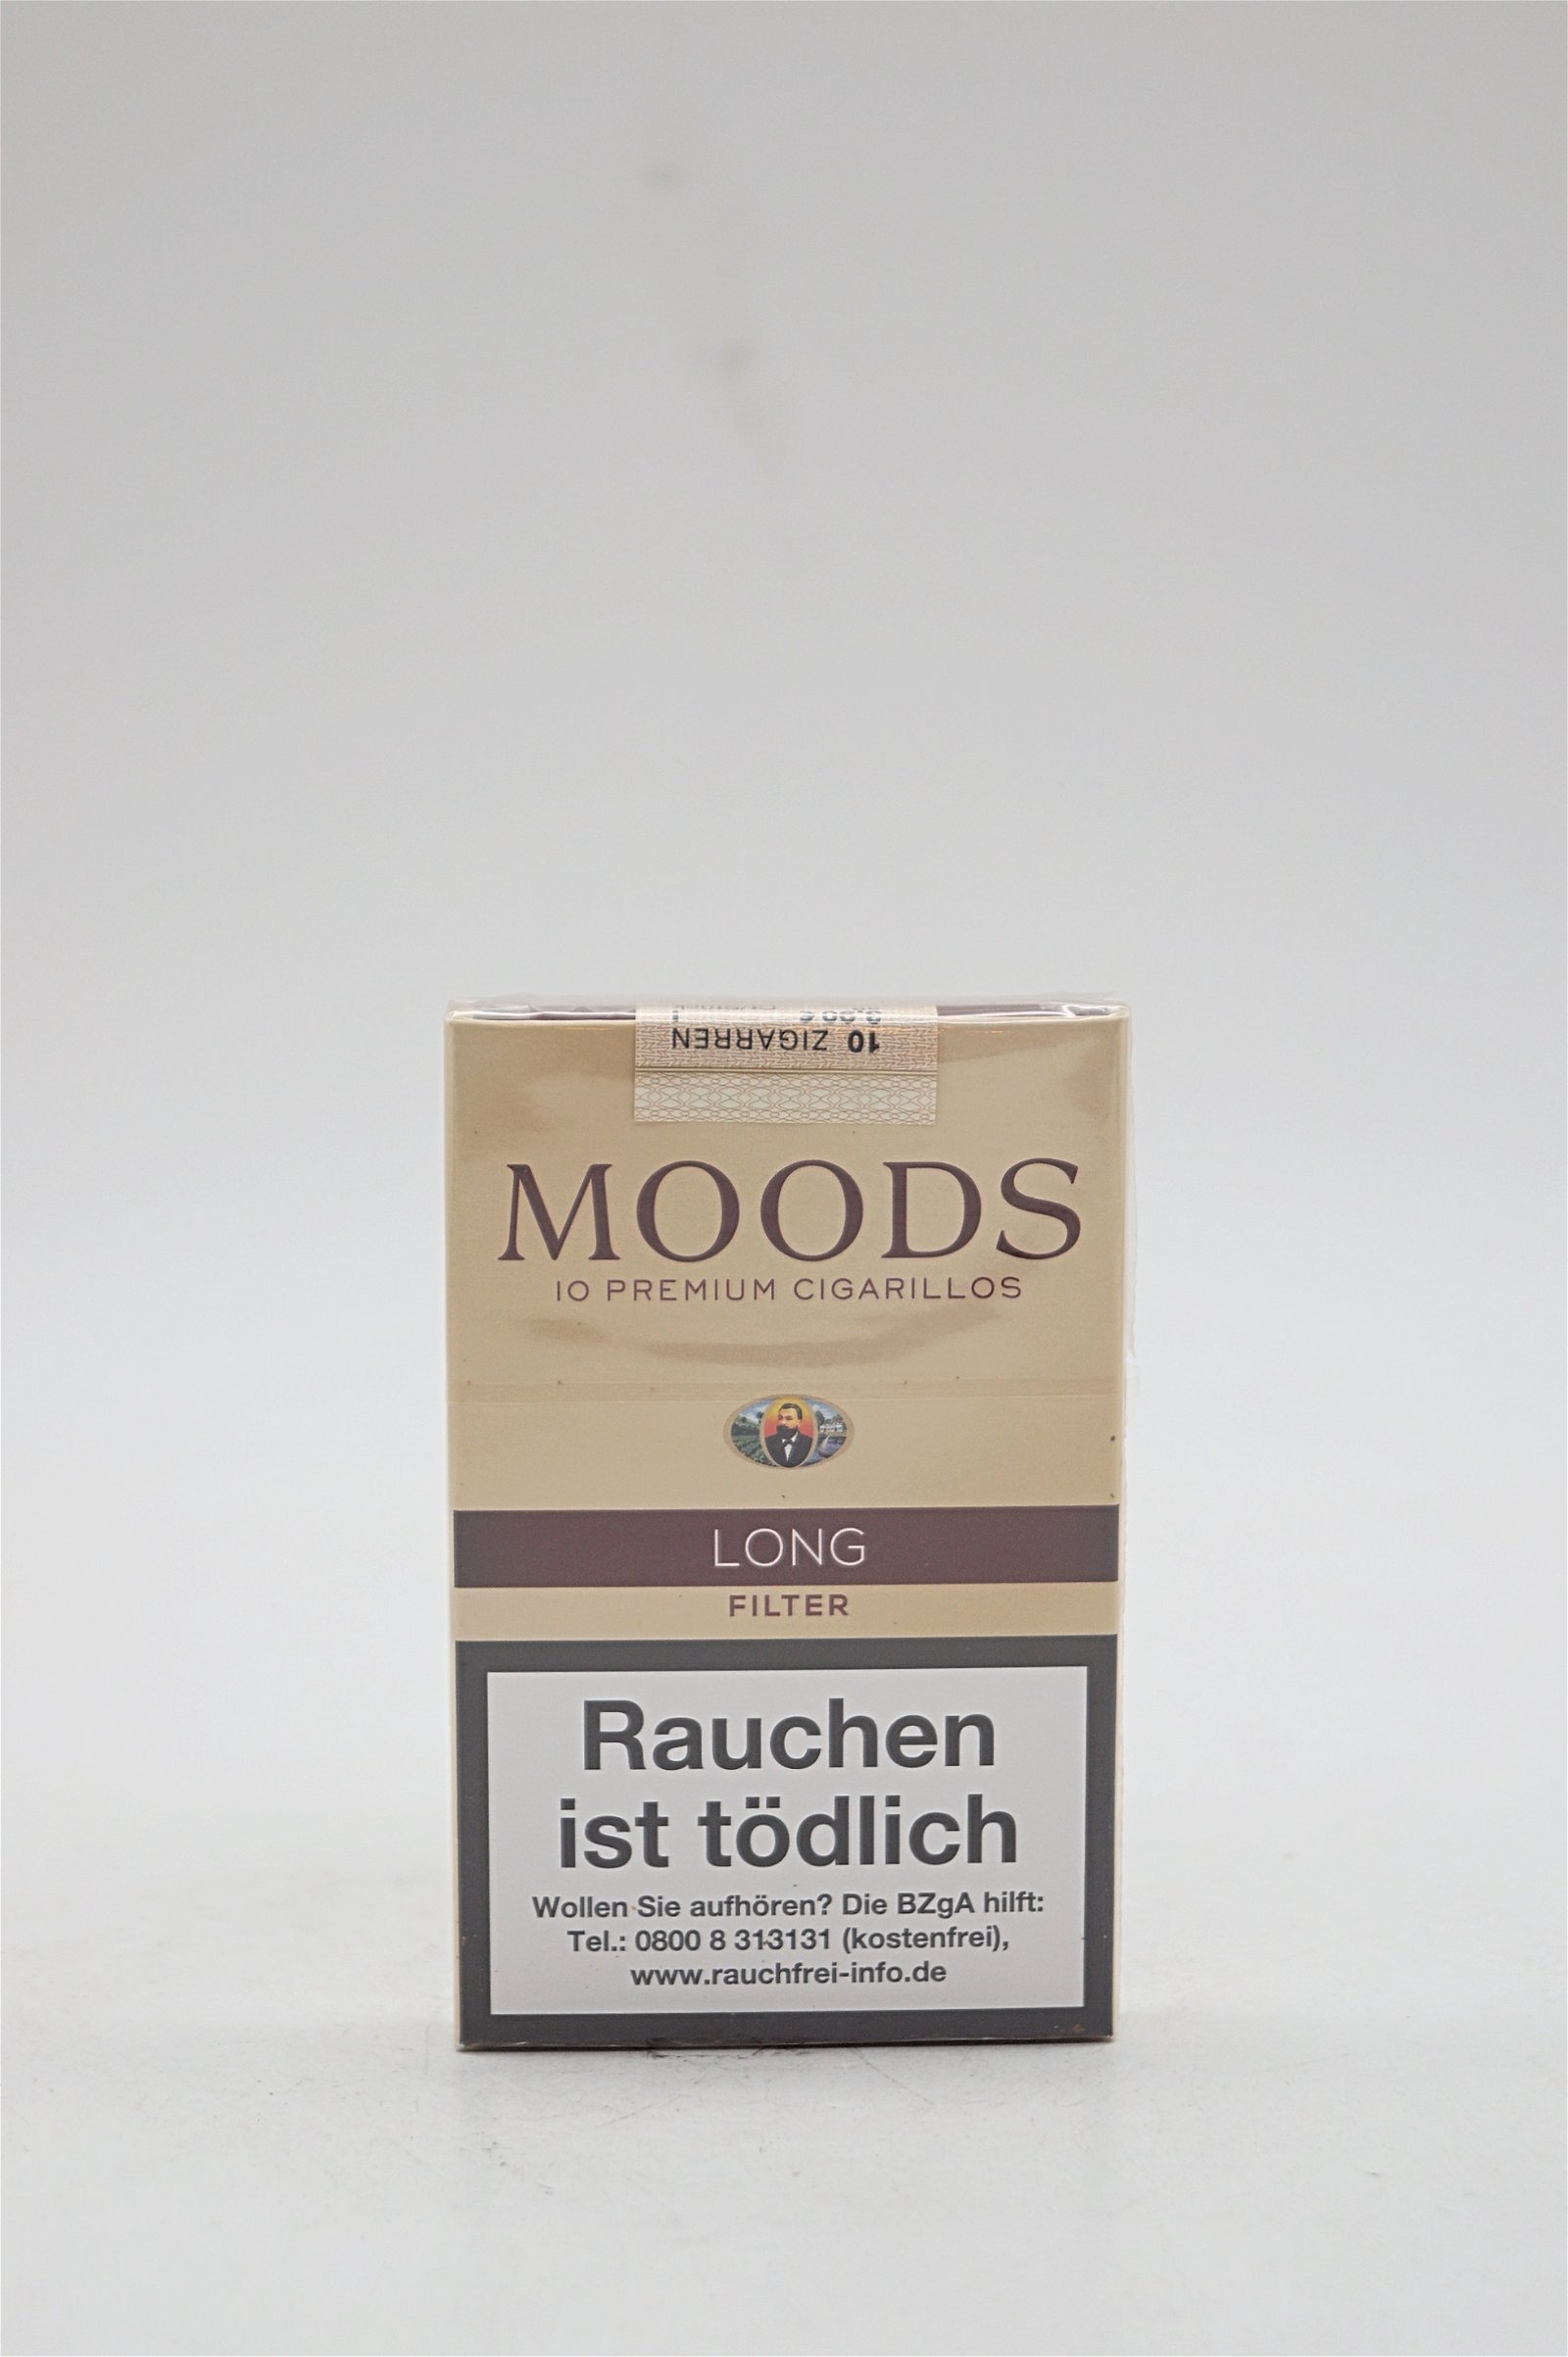 Moods Long Filter 10 Premium Cigarillos